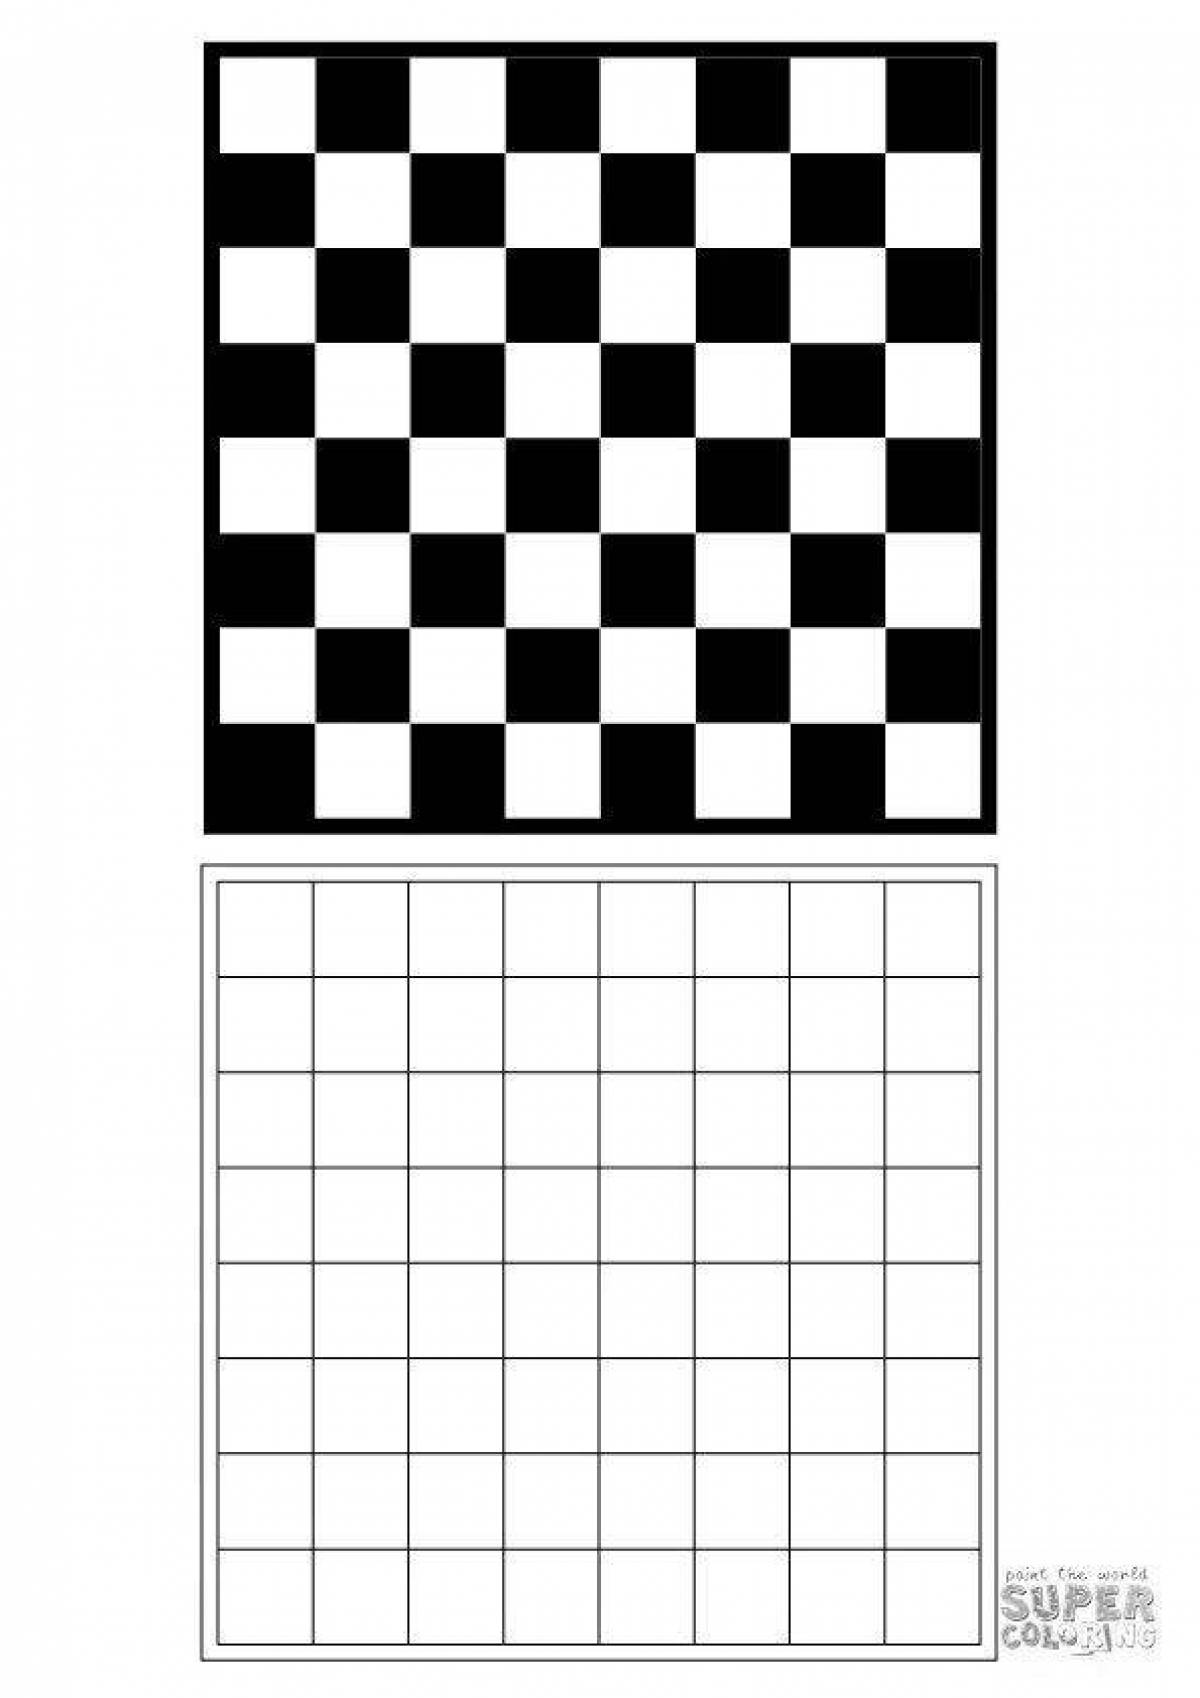 Chessboard #3